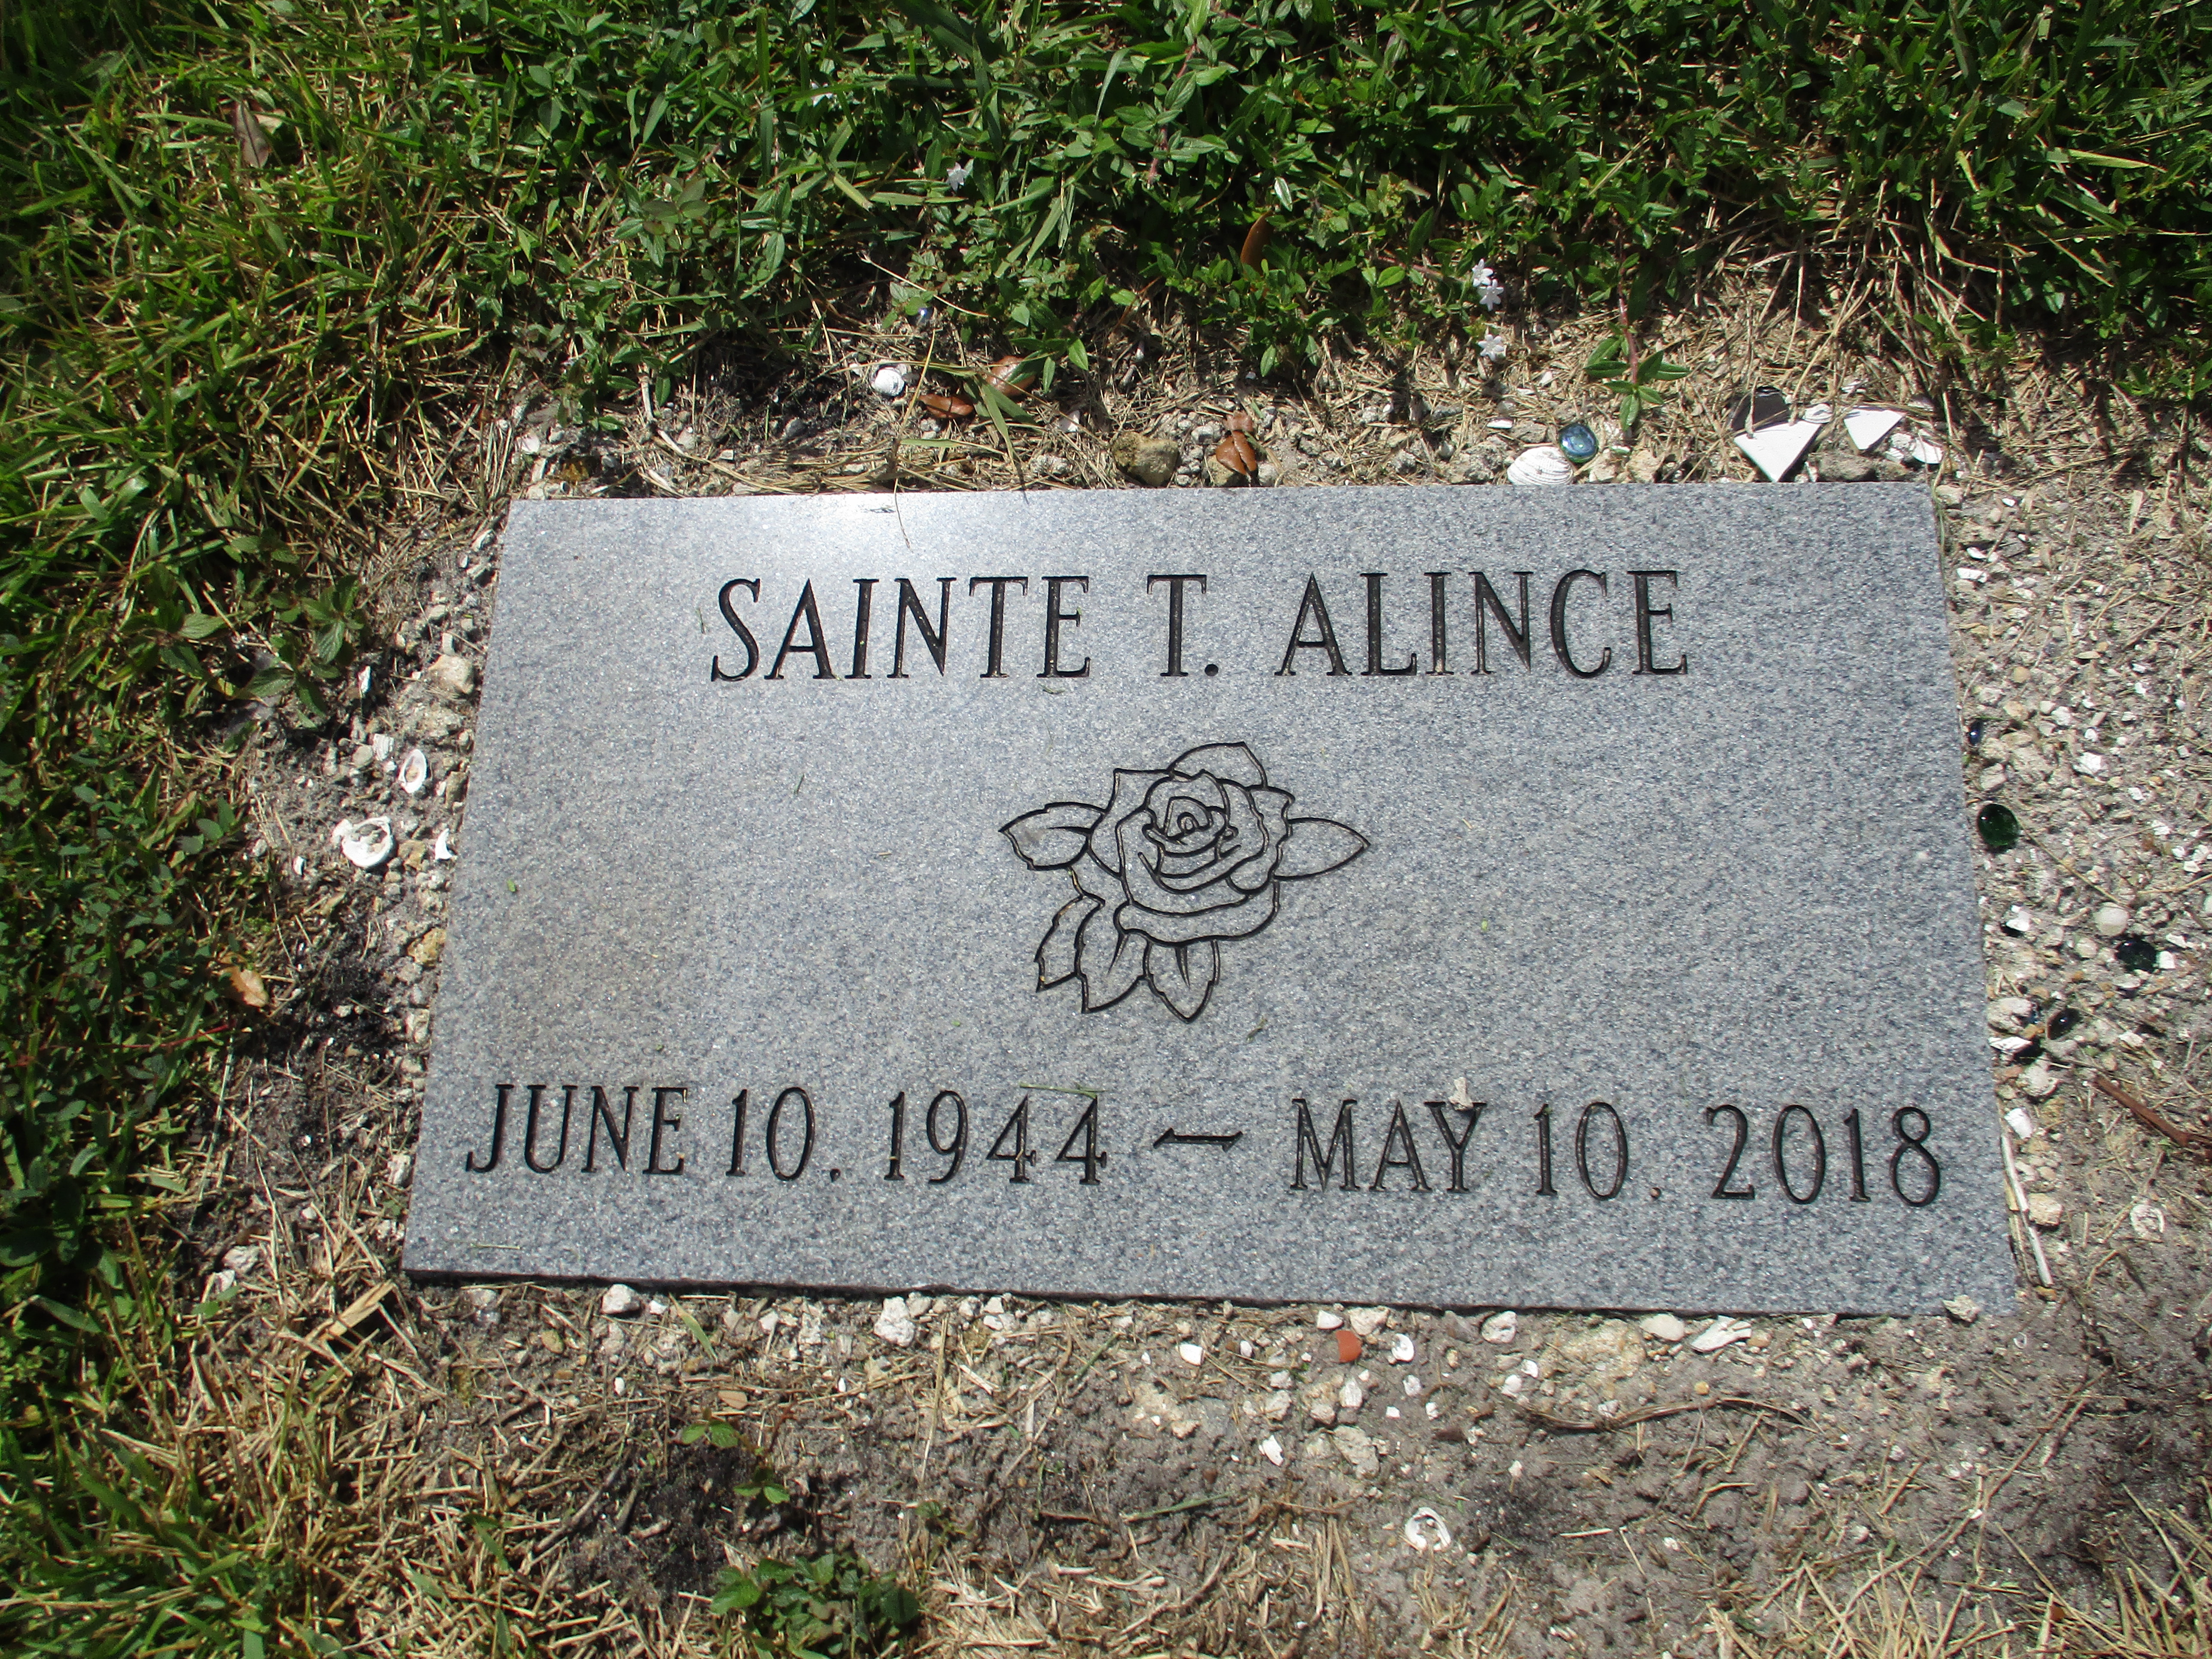 Sainte T Alince